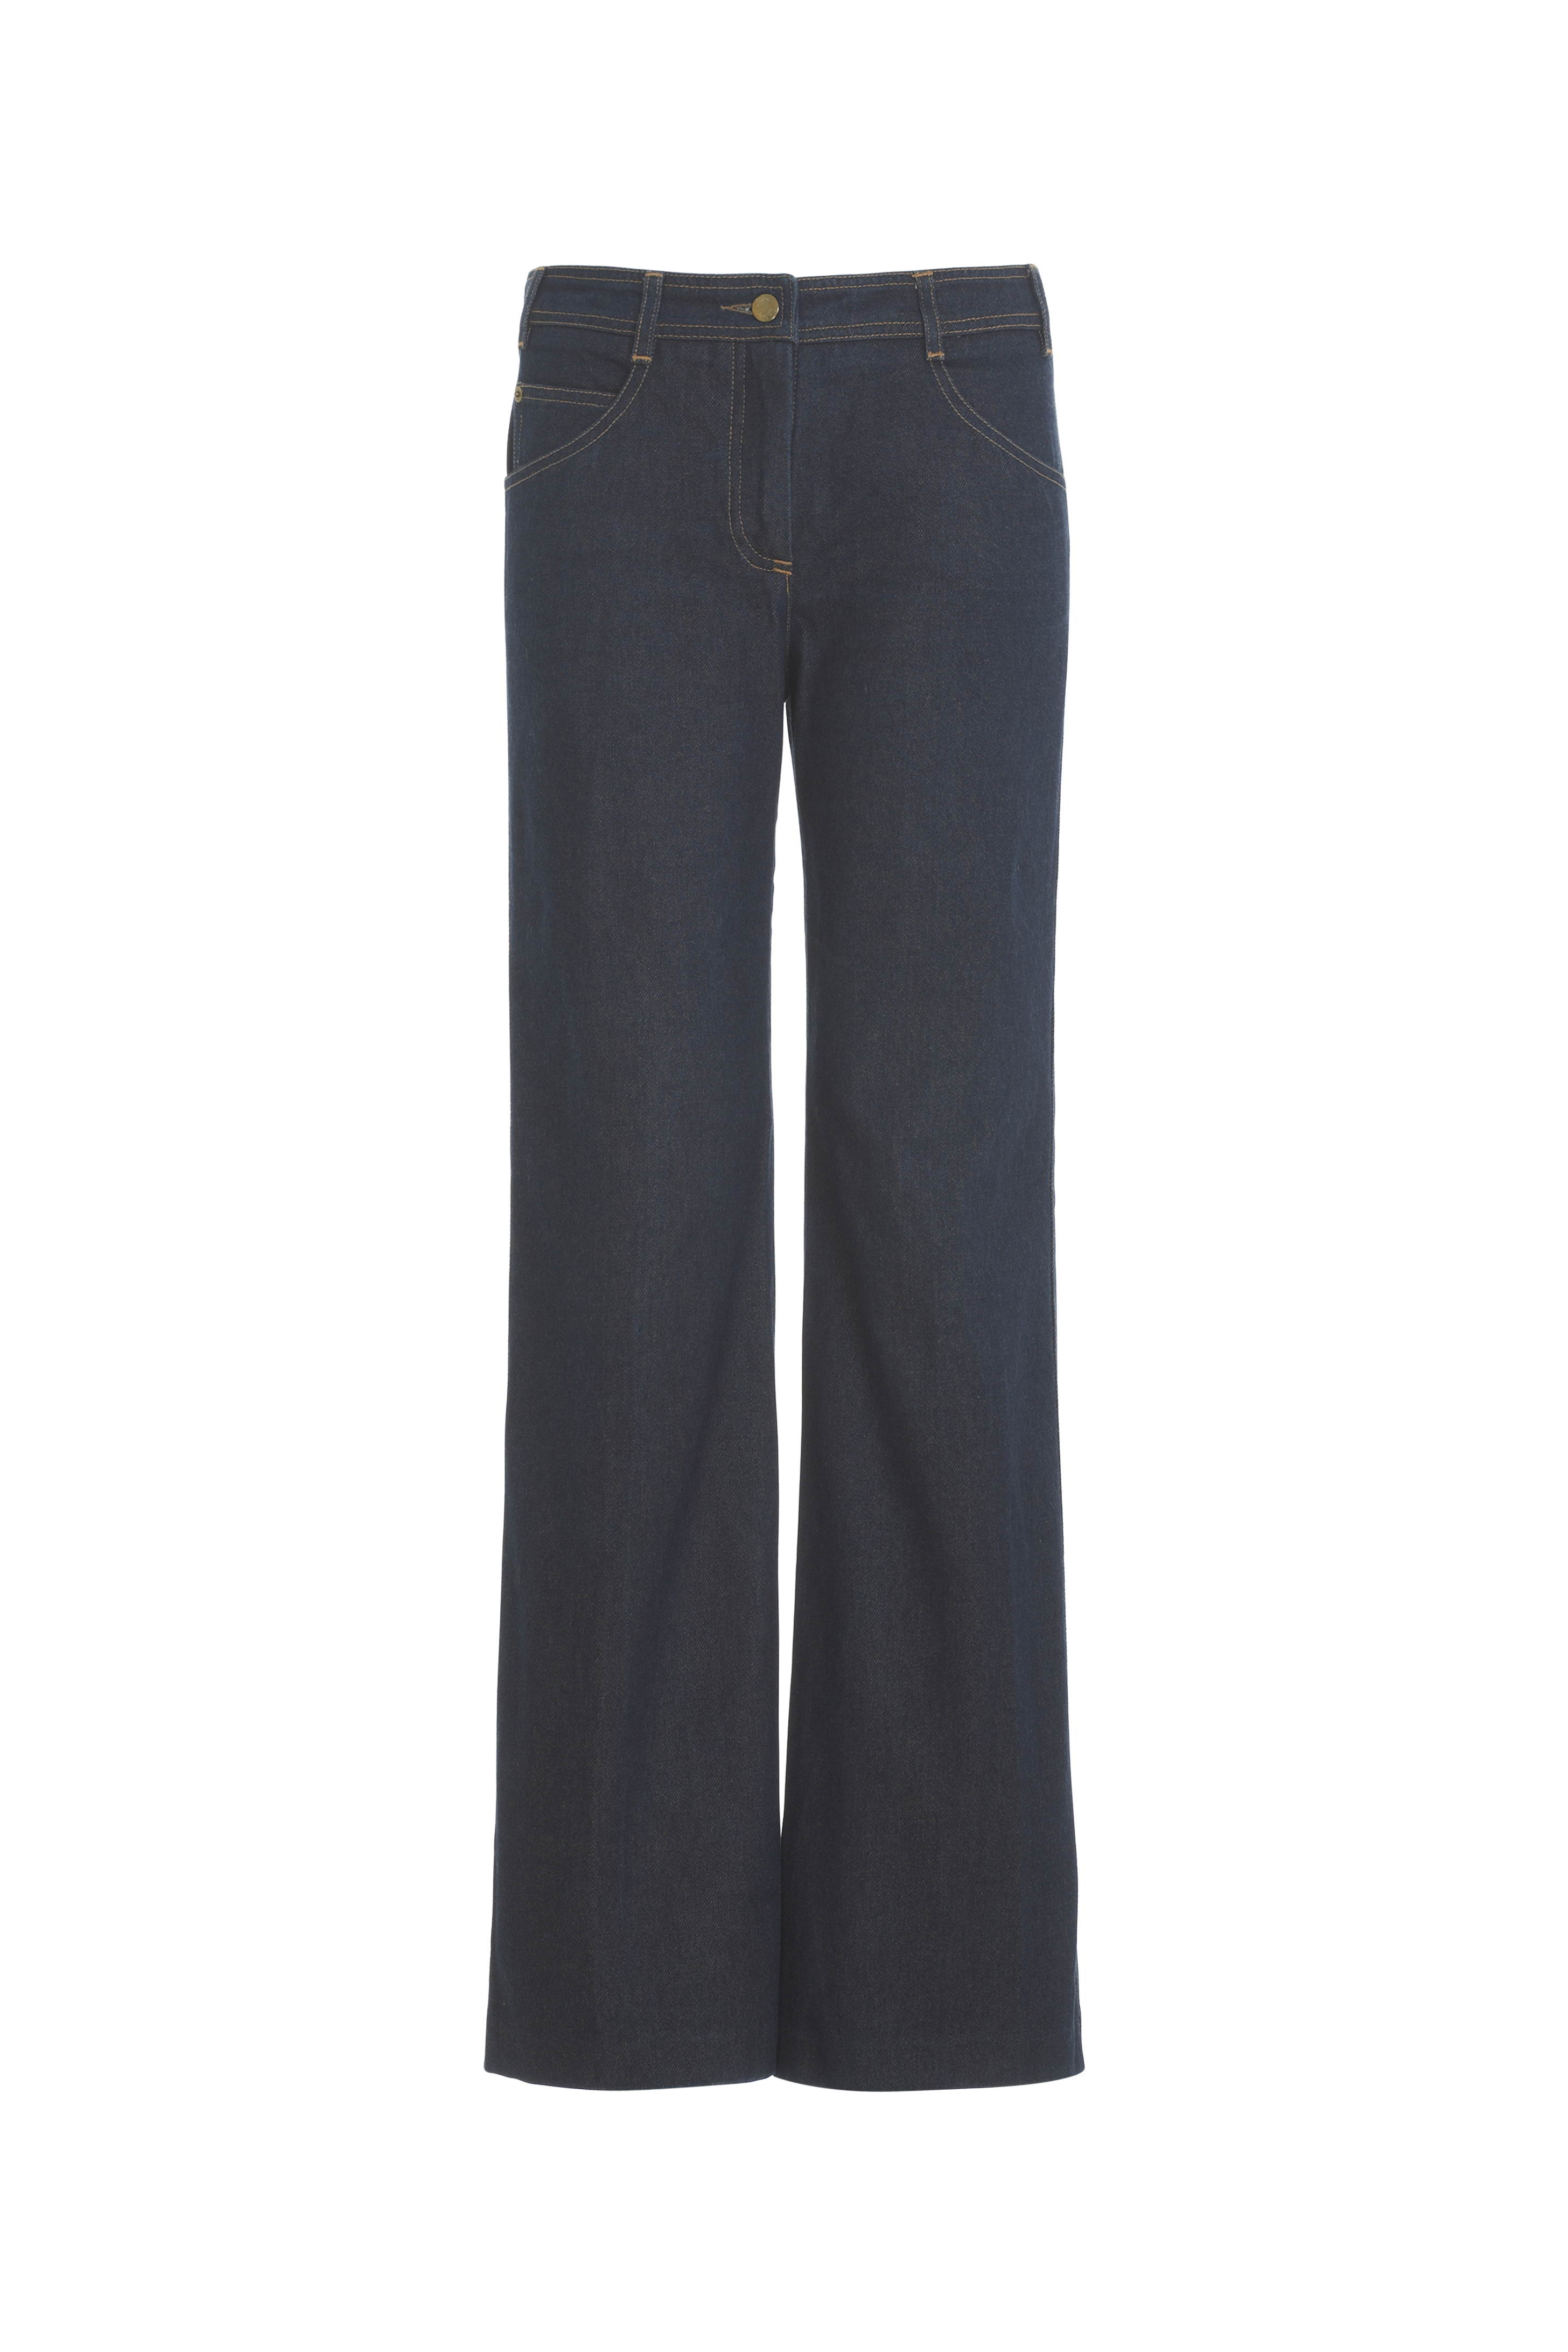 Chloe blue denim trousers with varsity logo | Curate8